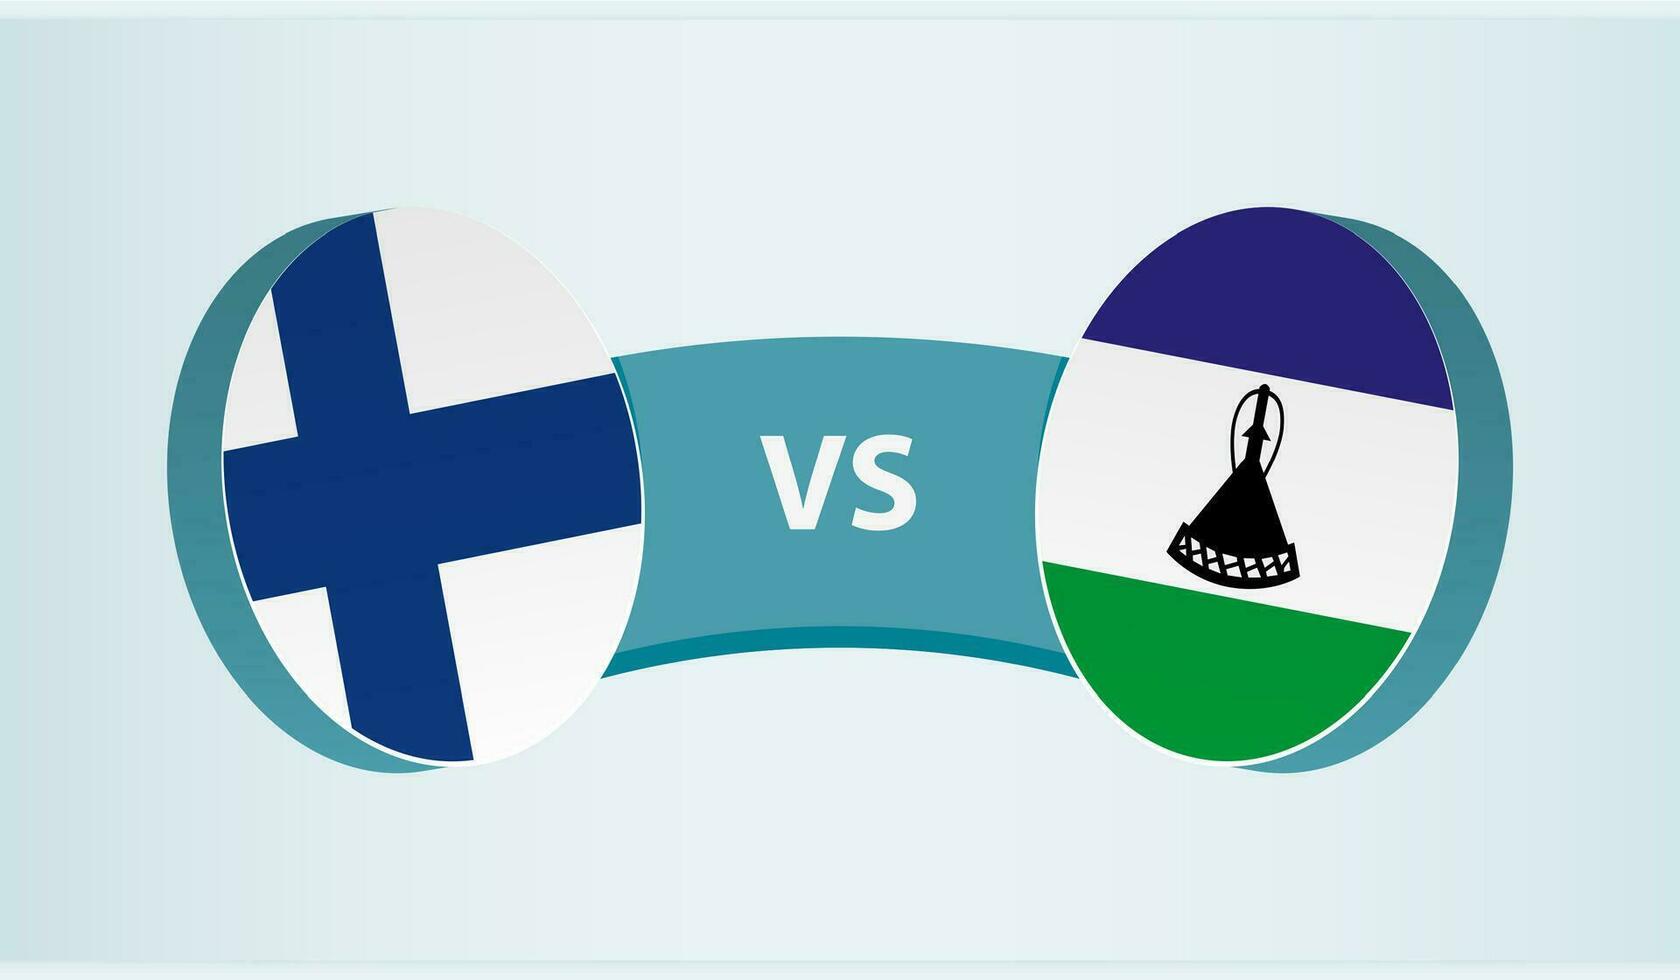 finland mot lesotho, team sporter konkurrens begrepp. vektor